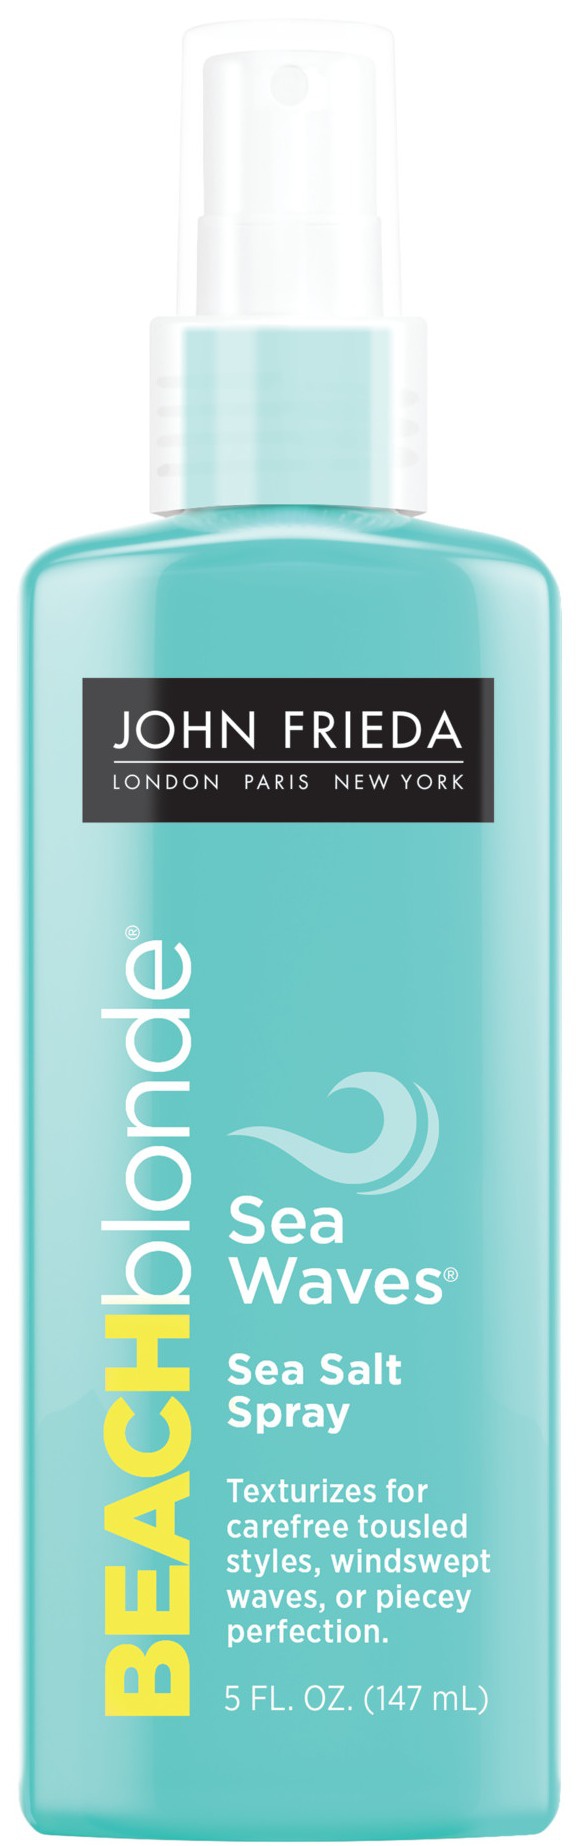 John Frieda Blonde Hair Beach Wave Spray